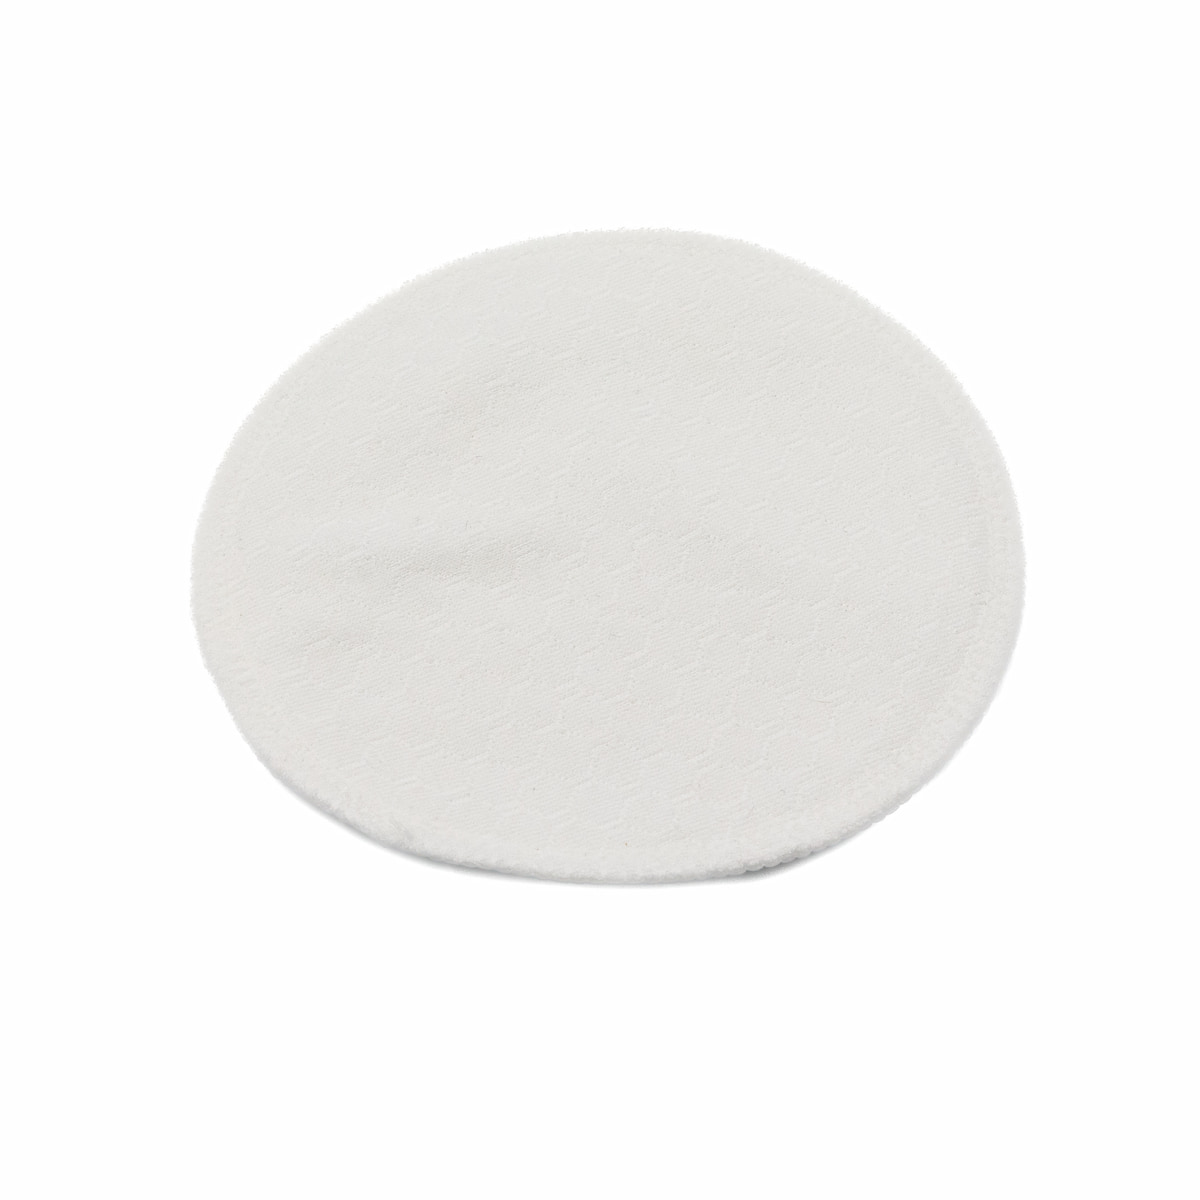 Discos absorbentes desechables para sujetadores de lactancia